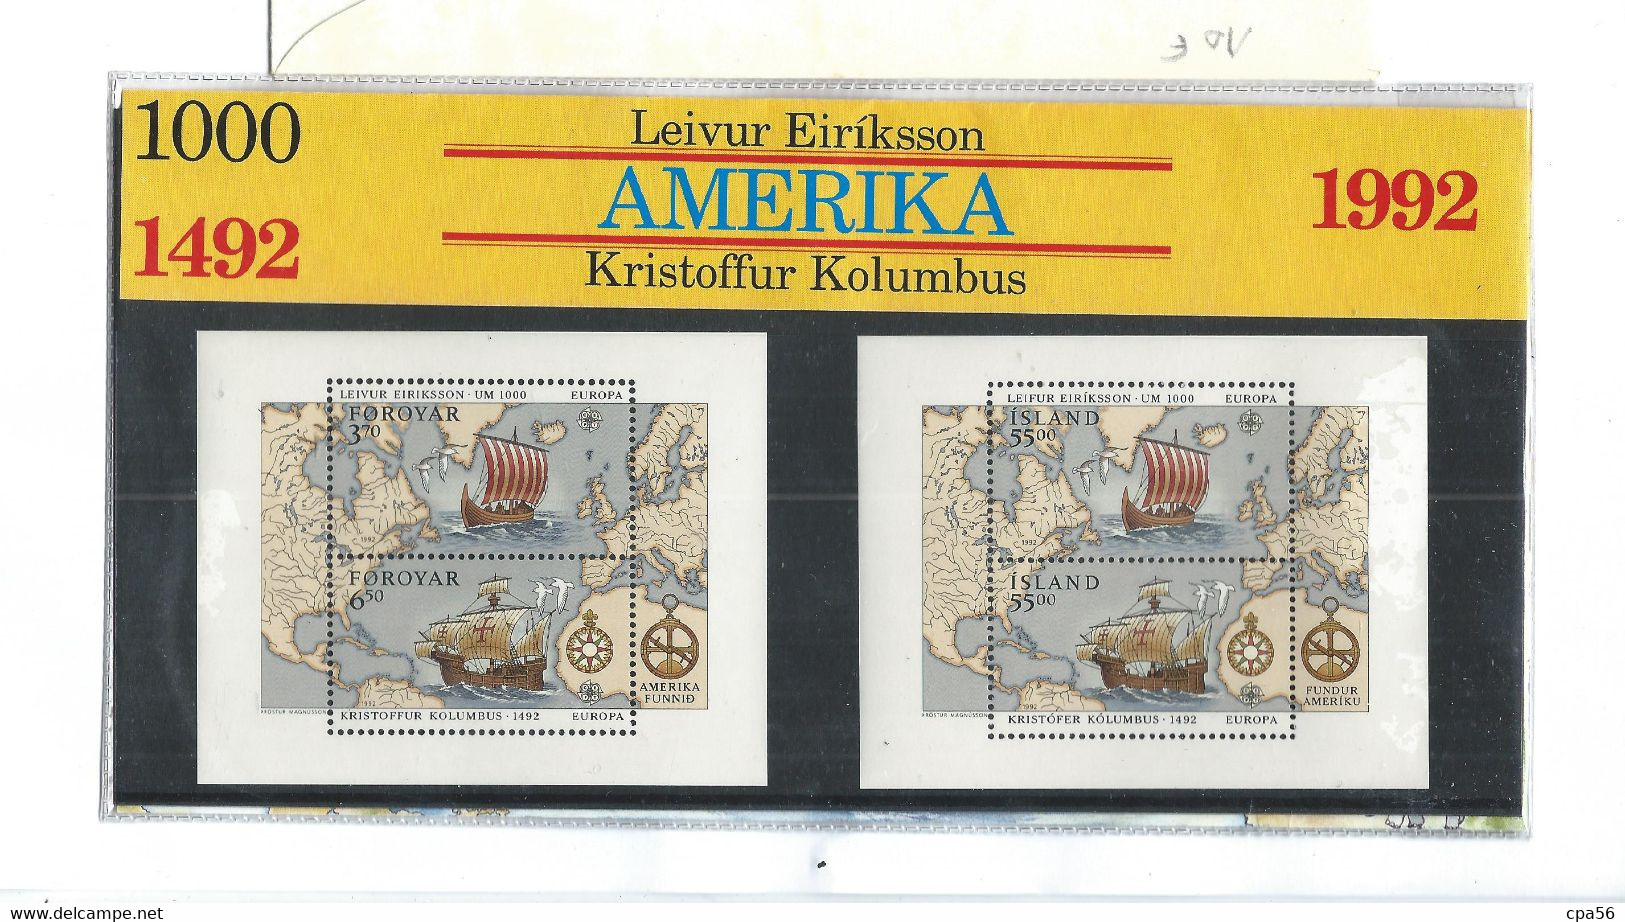 Iceland Island And Faroe Islands 1992 Leivur Eiriksson / Kristoffur Kolumbus Amerika, Folder With Blocs MNH(**) - Neufs